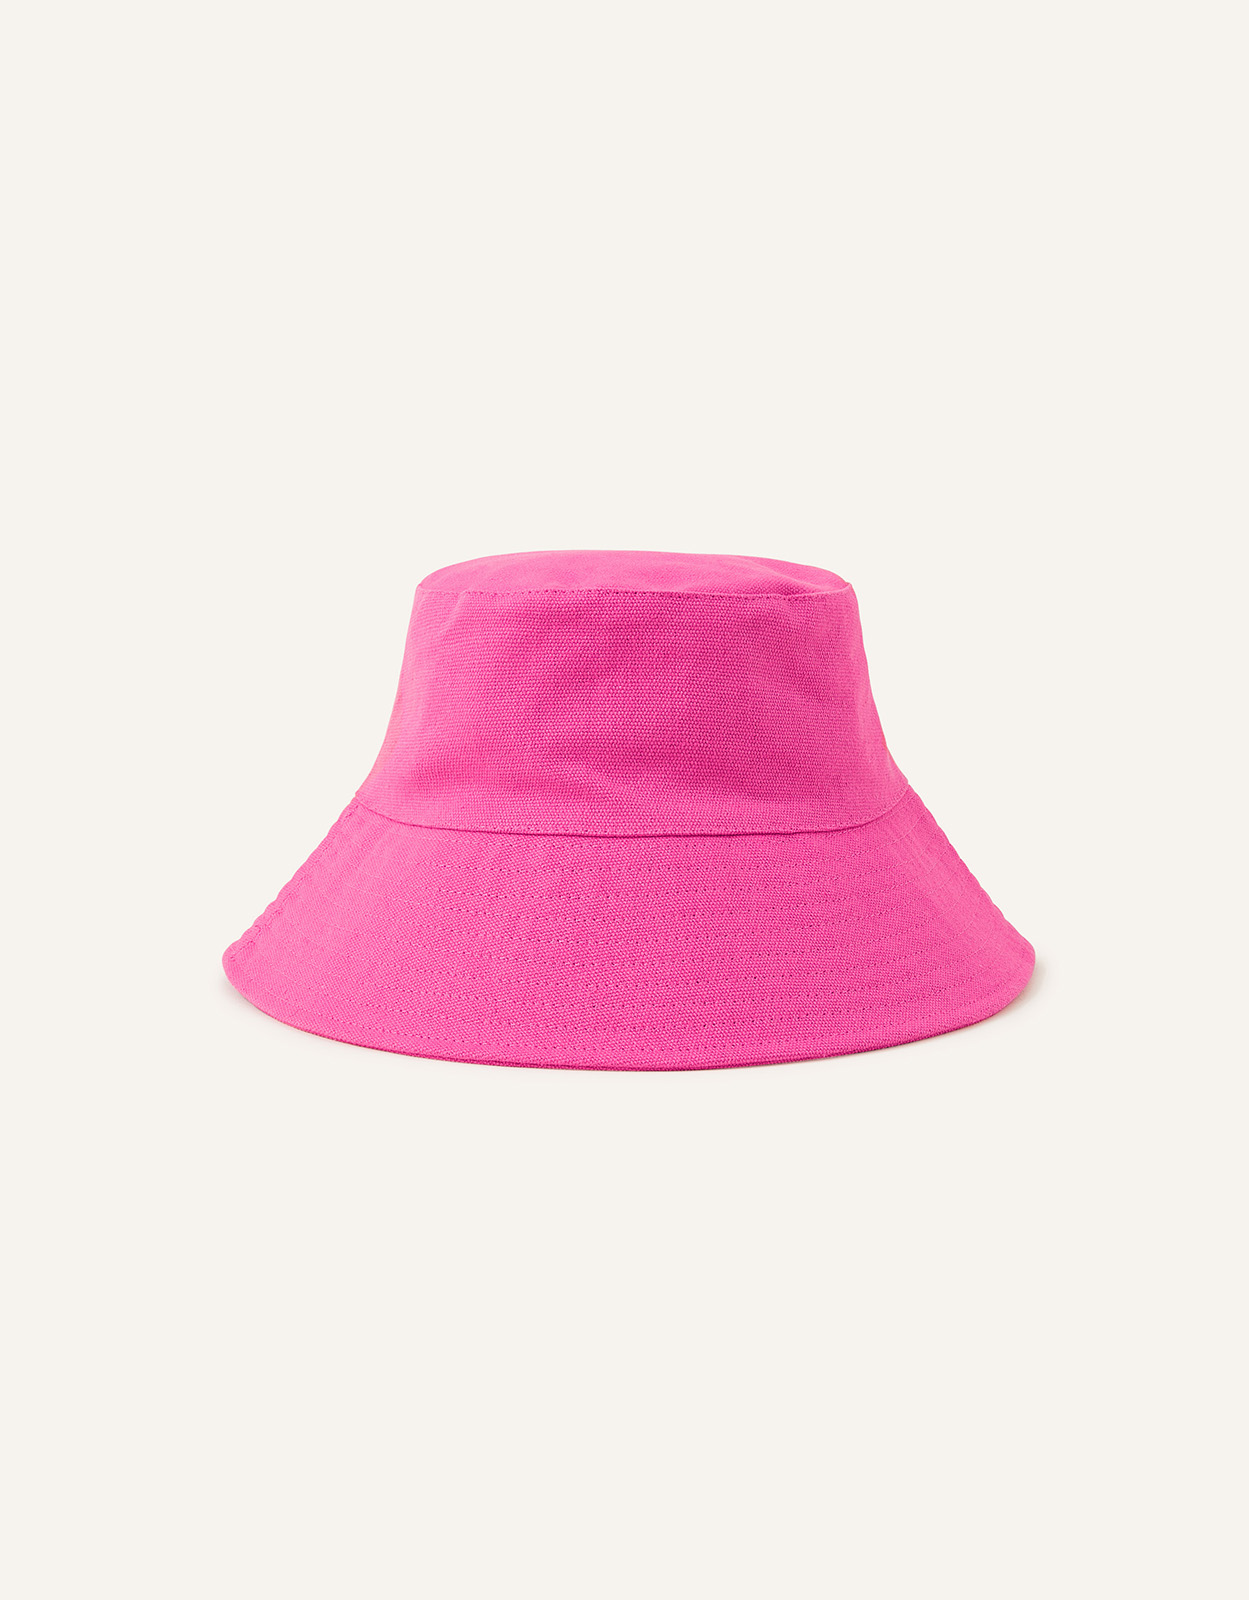 Accessorize Women's Canvas Bucket Hat